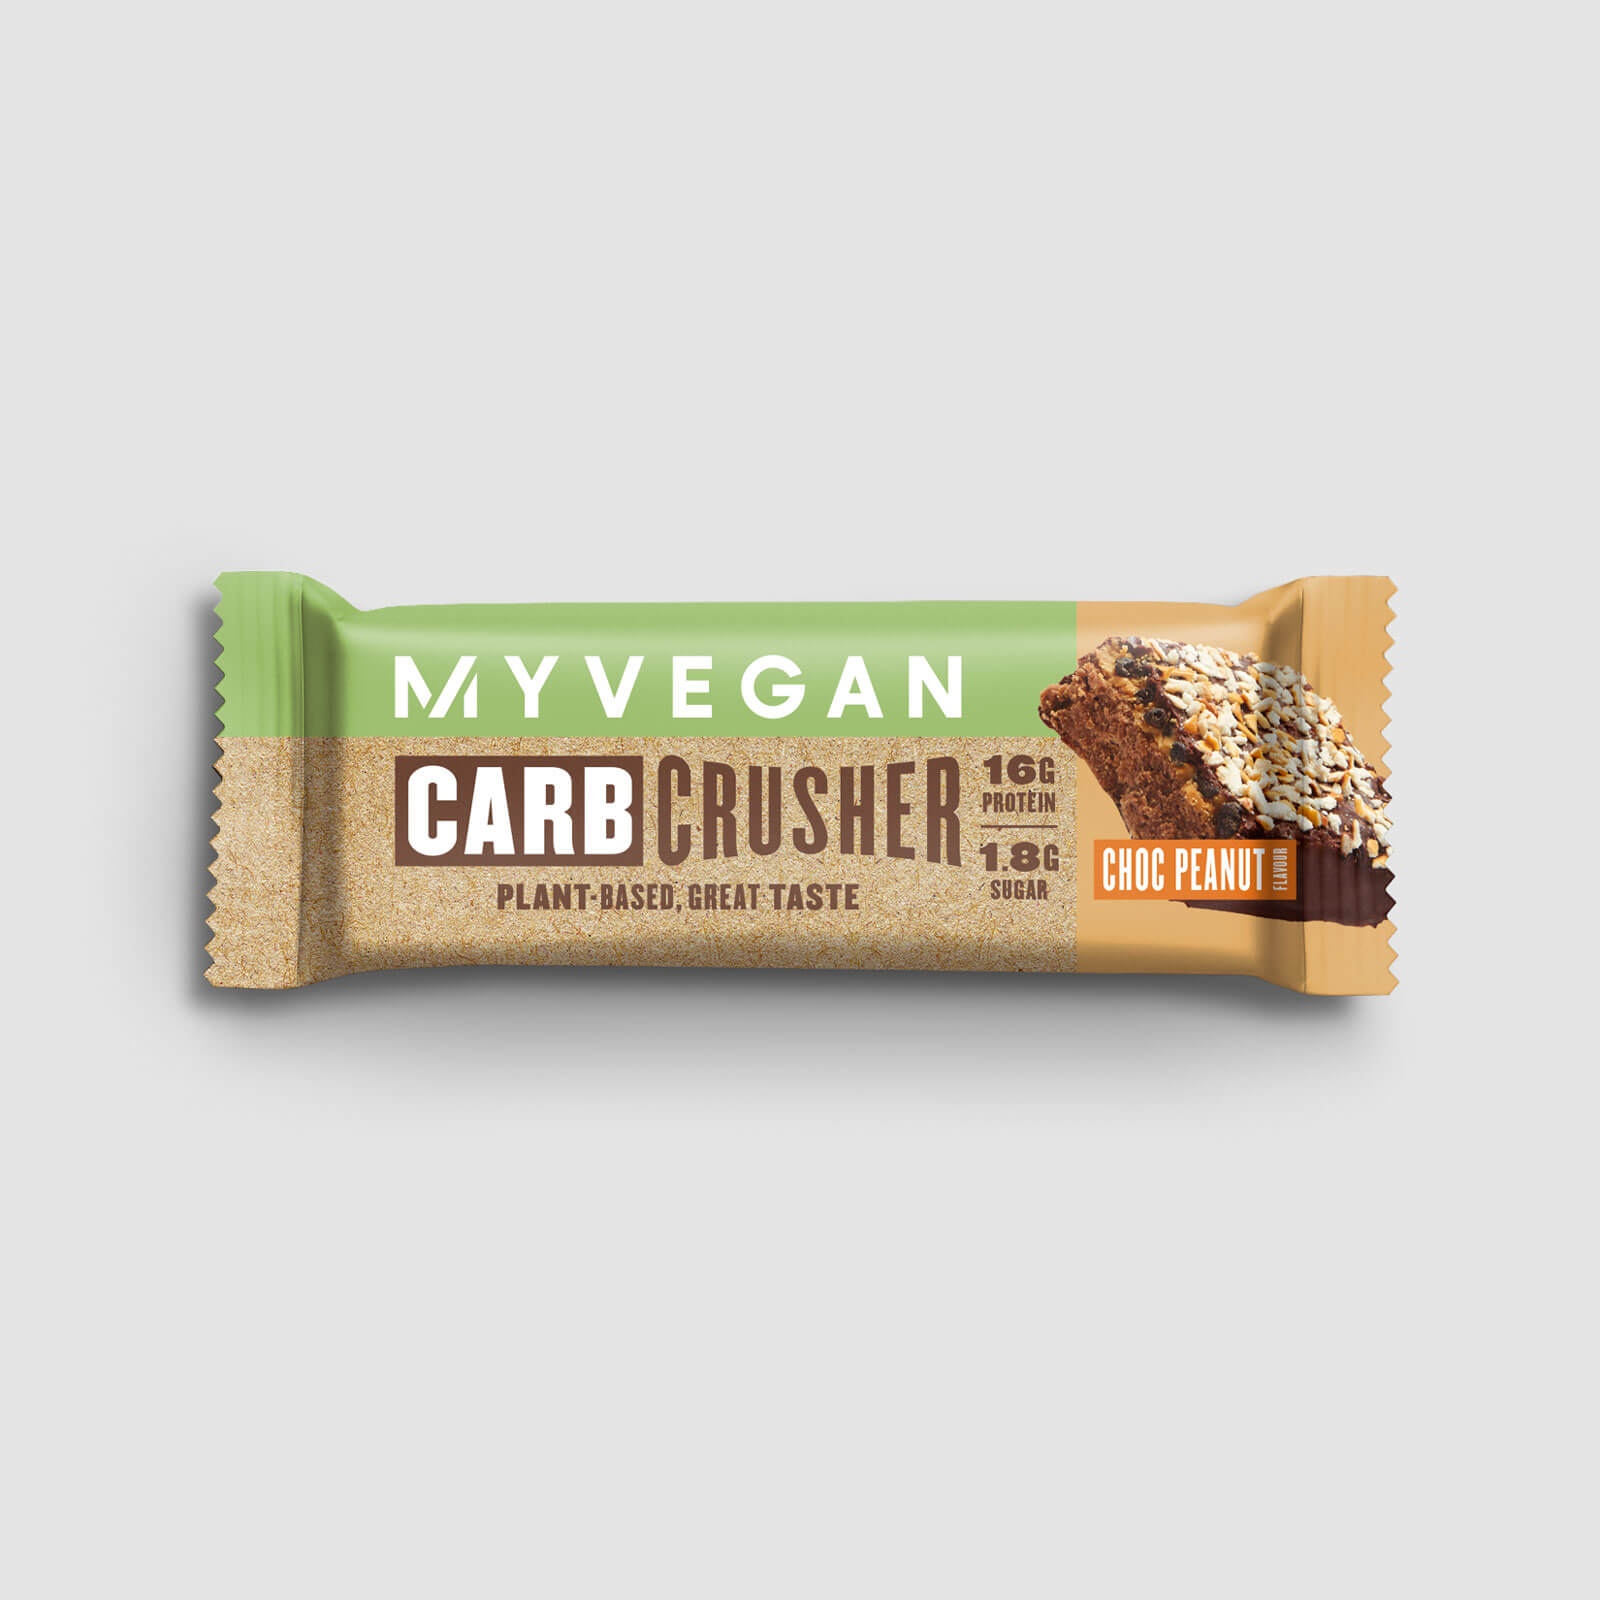 Myprotein Vegan Carb Crusher (Sample) - Peanut Butter